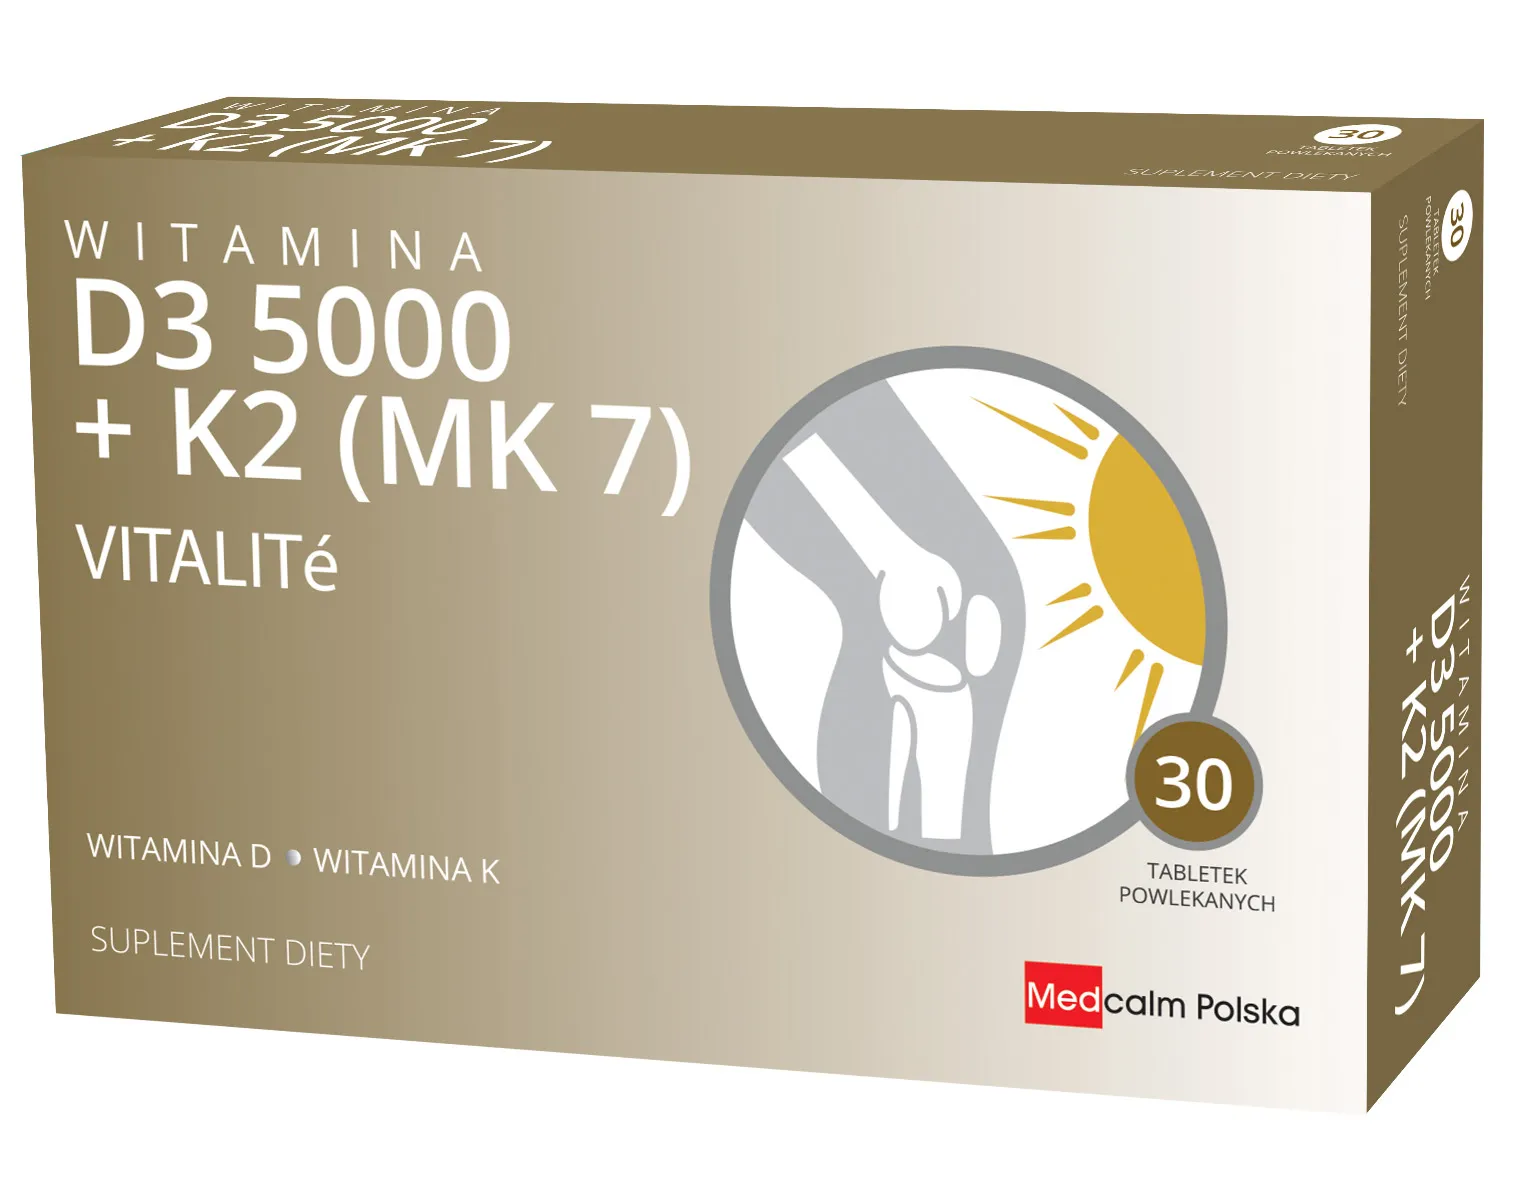 Vitalite Witamina D3 5000 + K2 (MK-7), suplement diety, 30 tabletek